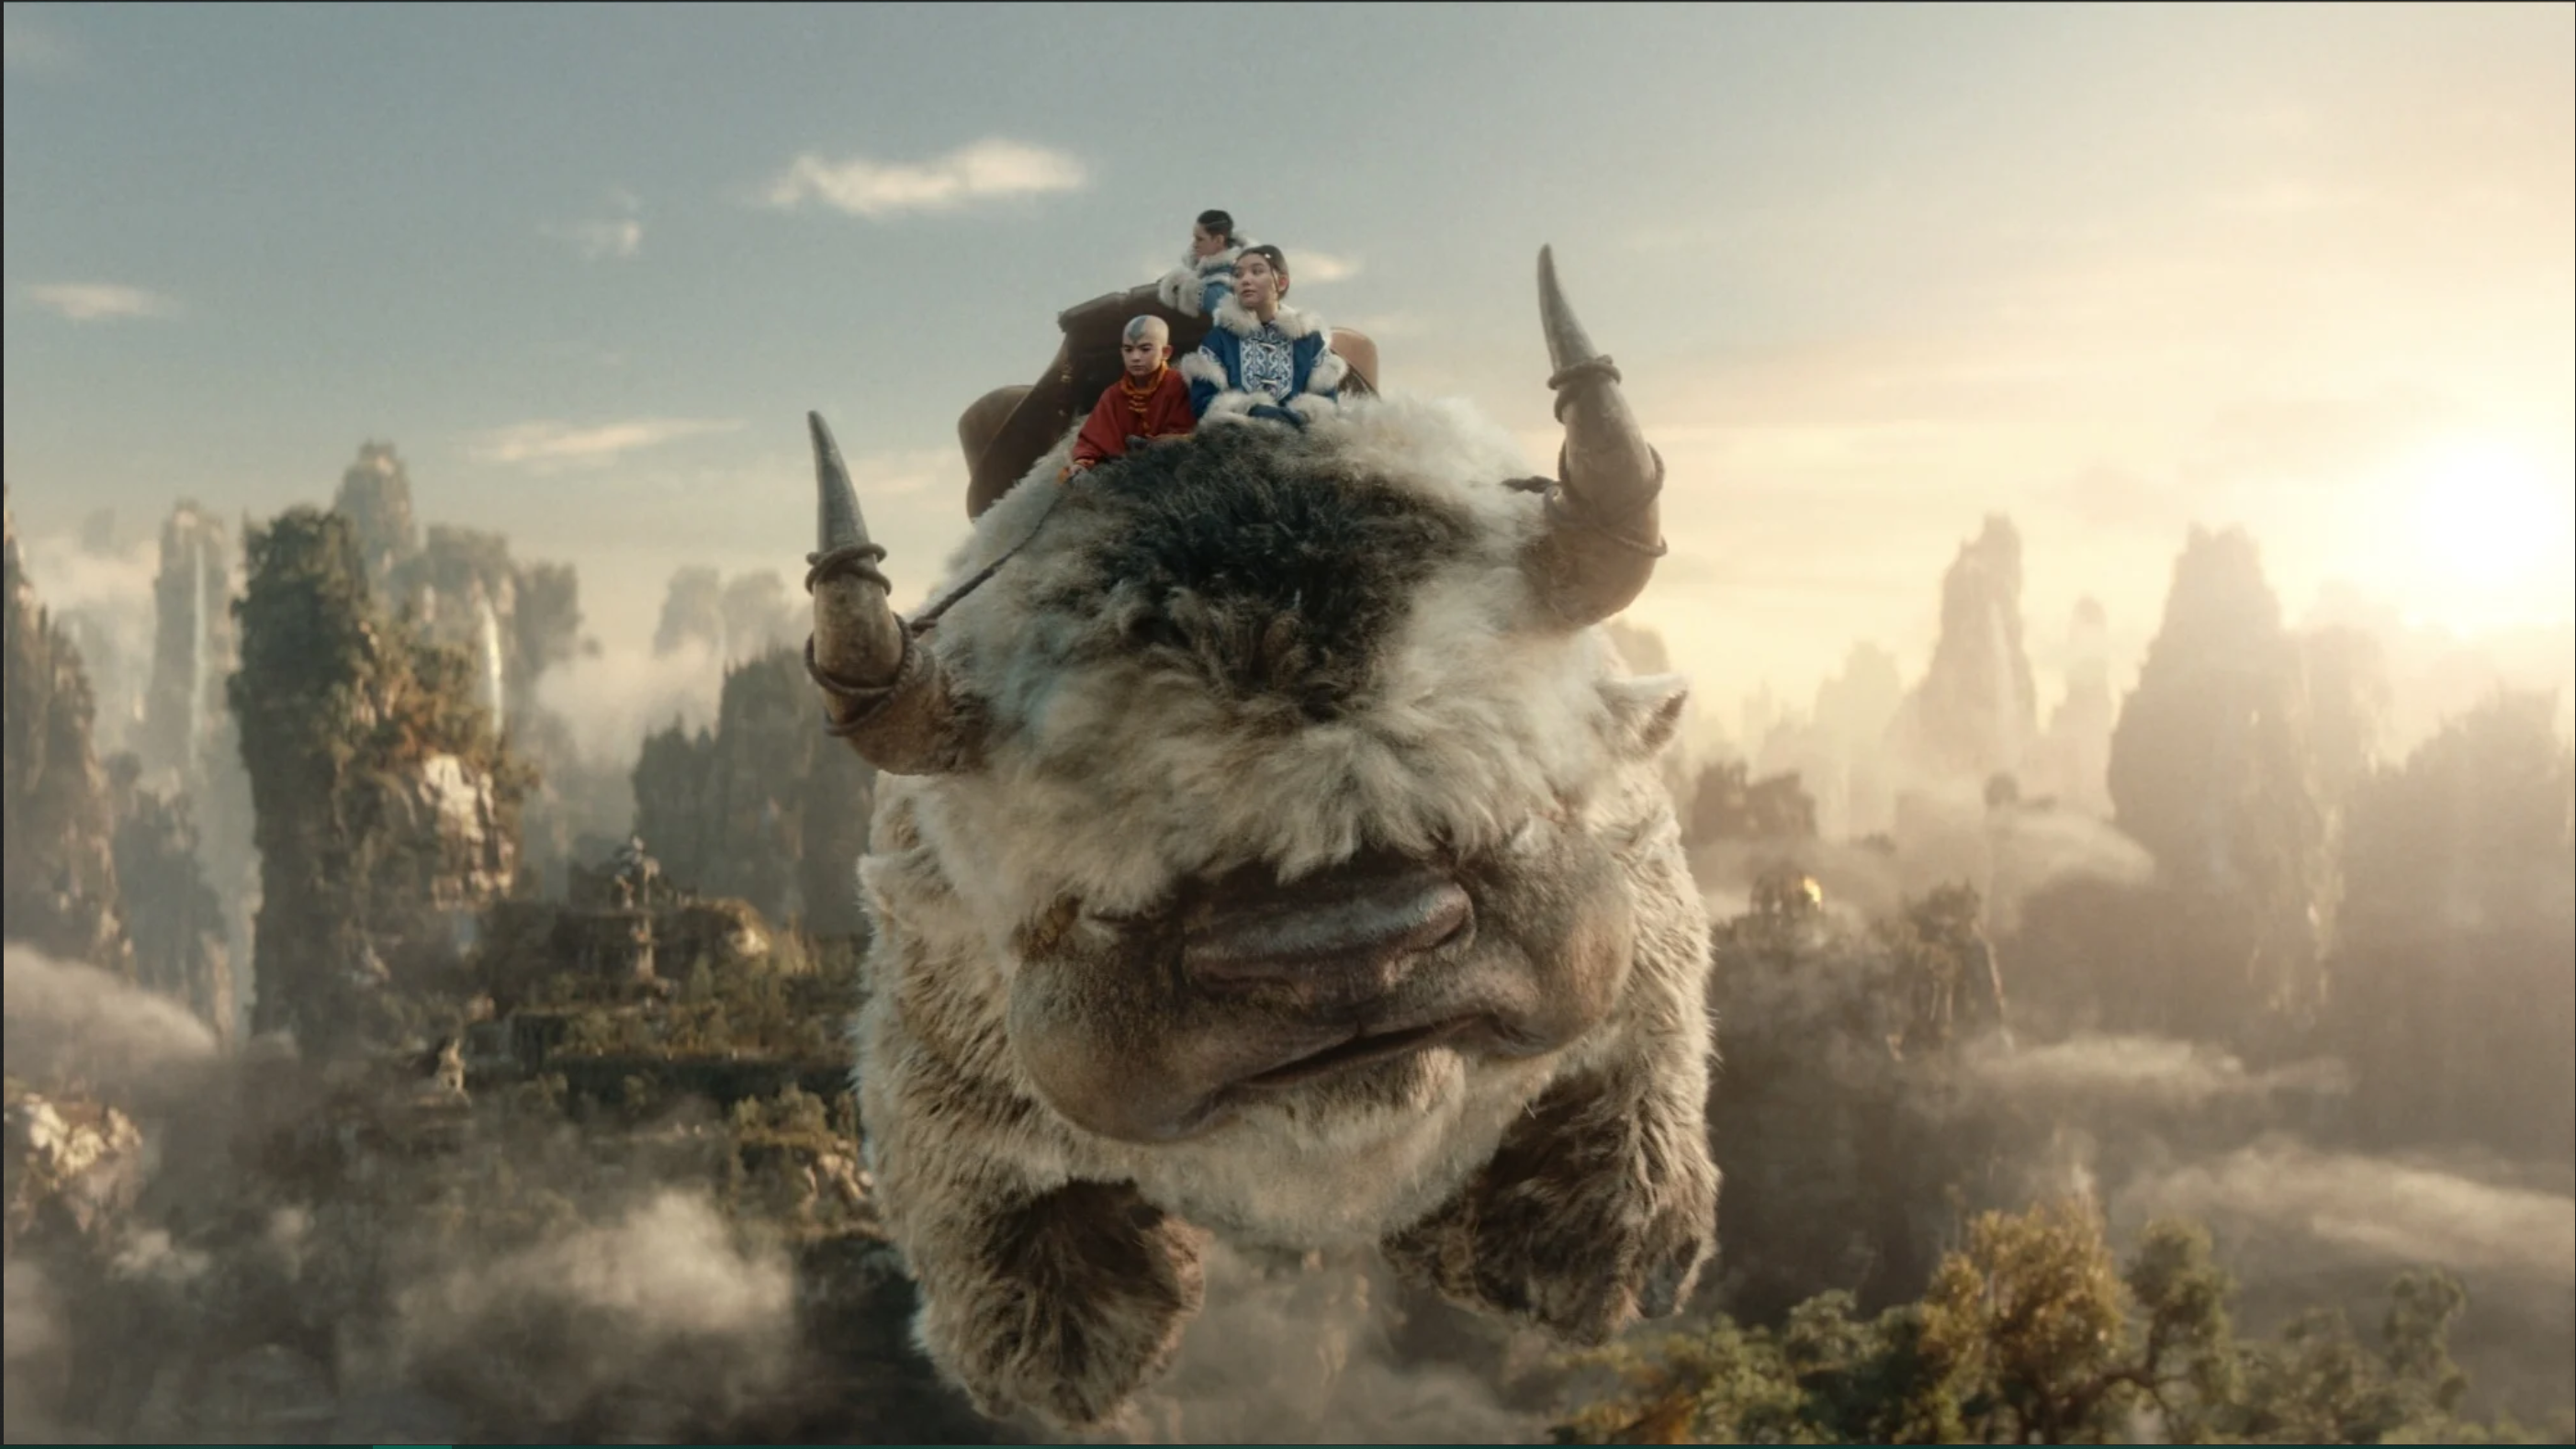 Avatar: The Last Airbender. 2024-present. Netflix.
Aang, Katara, and Sokka riding on Appa.